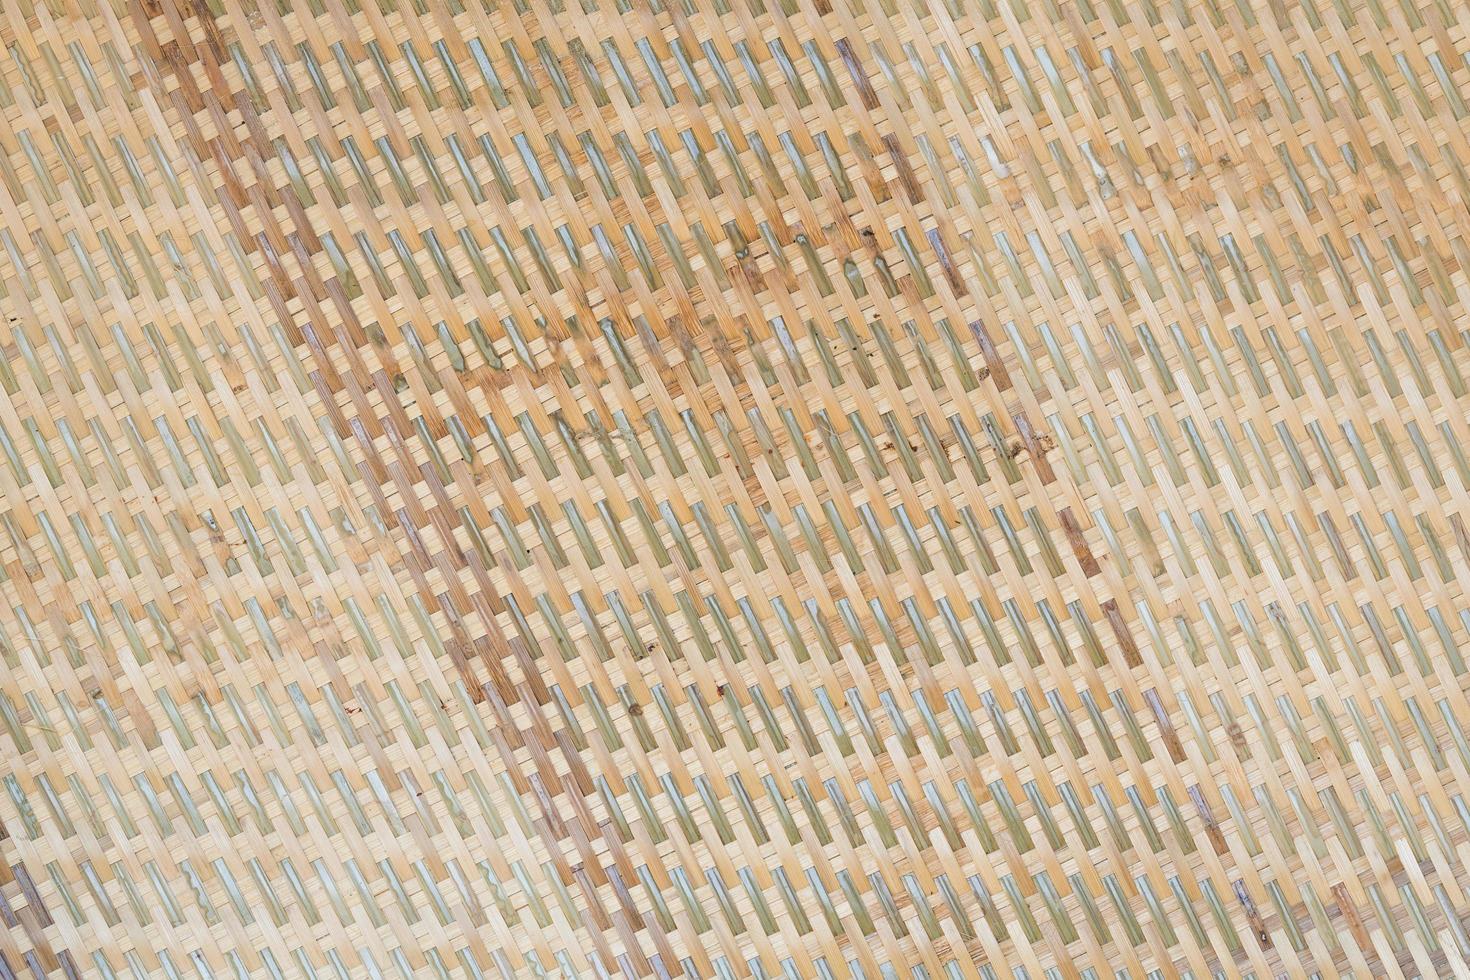 Wooden mat background photo